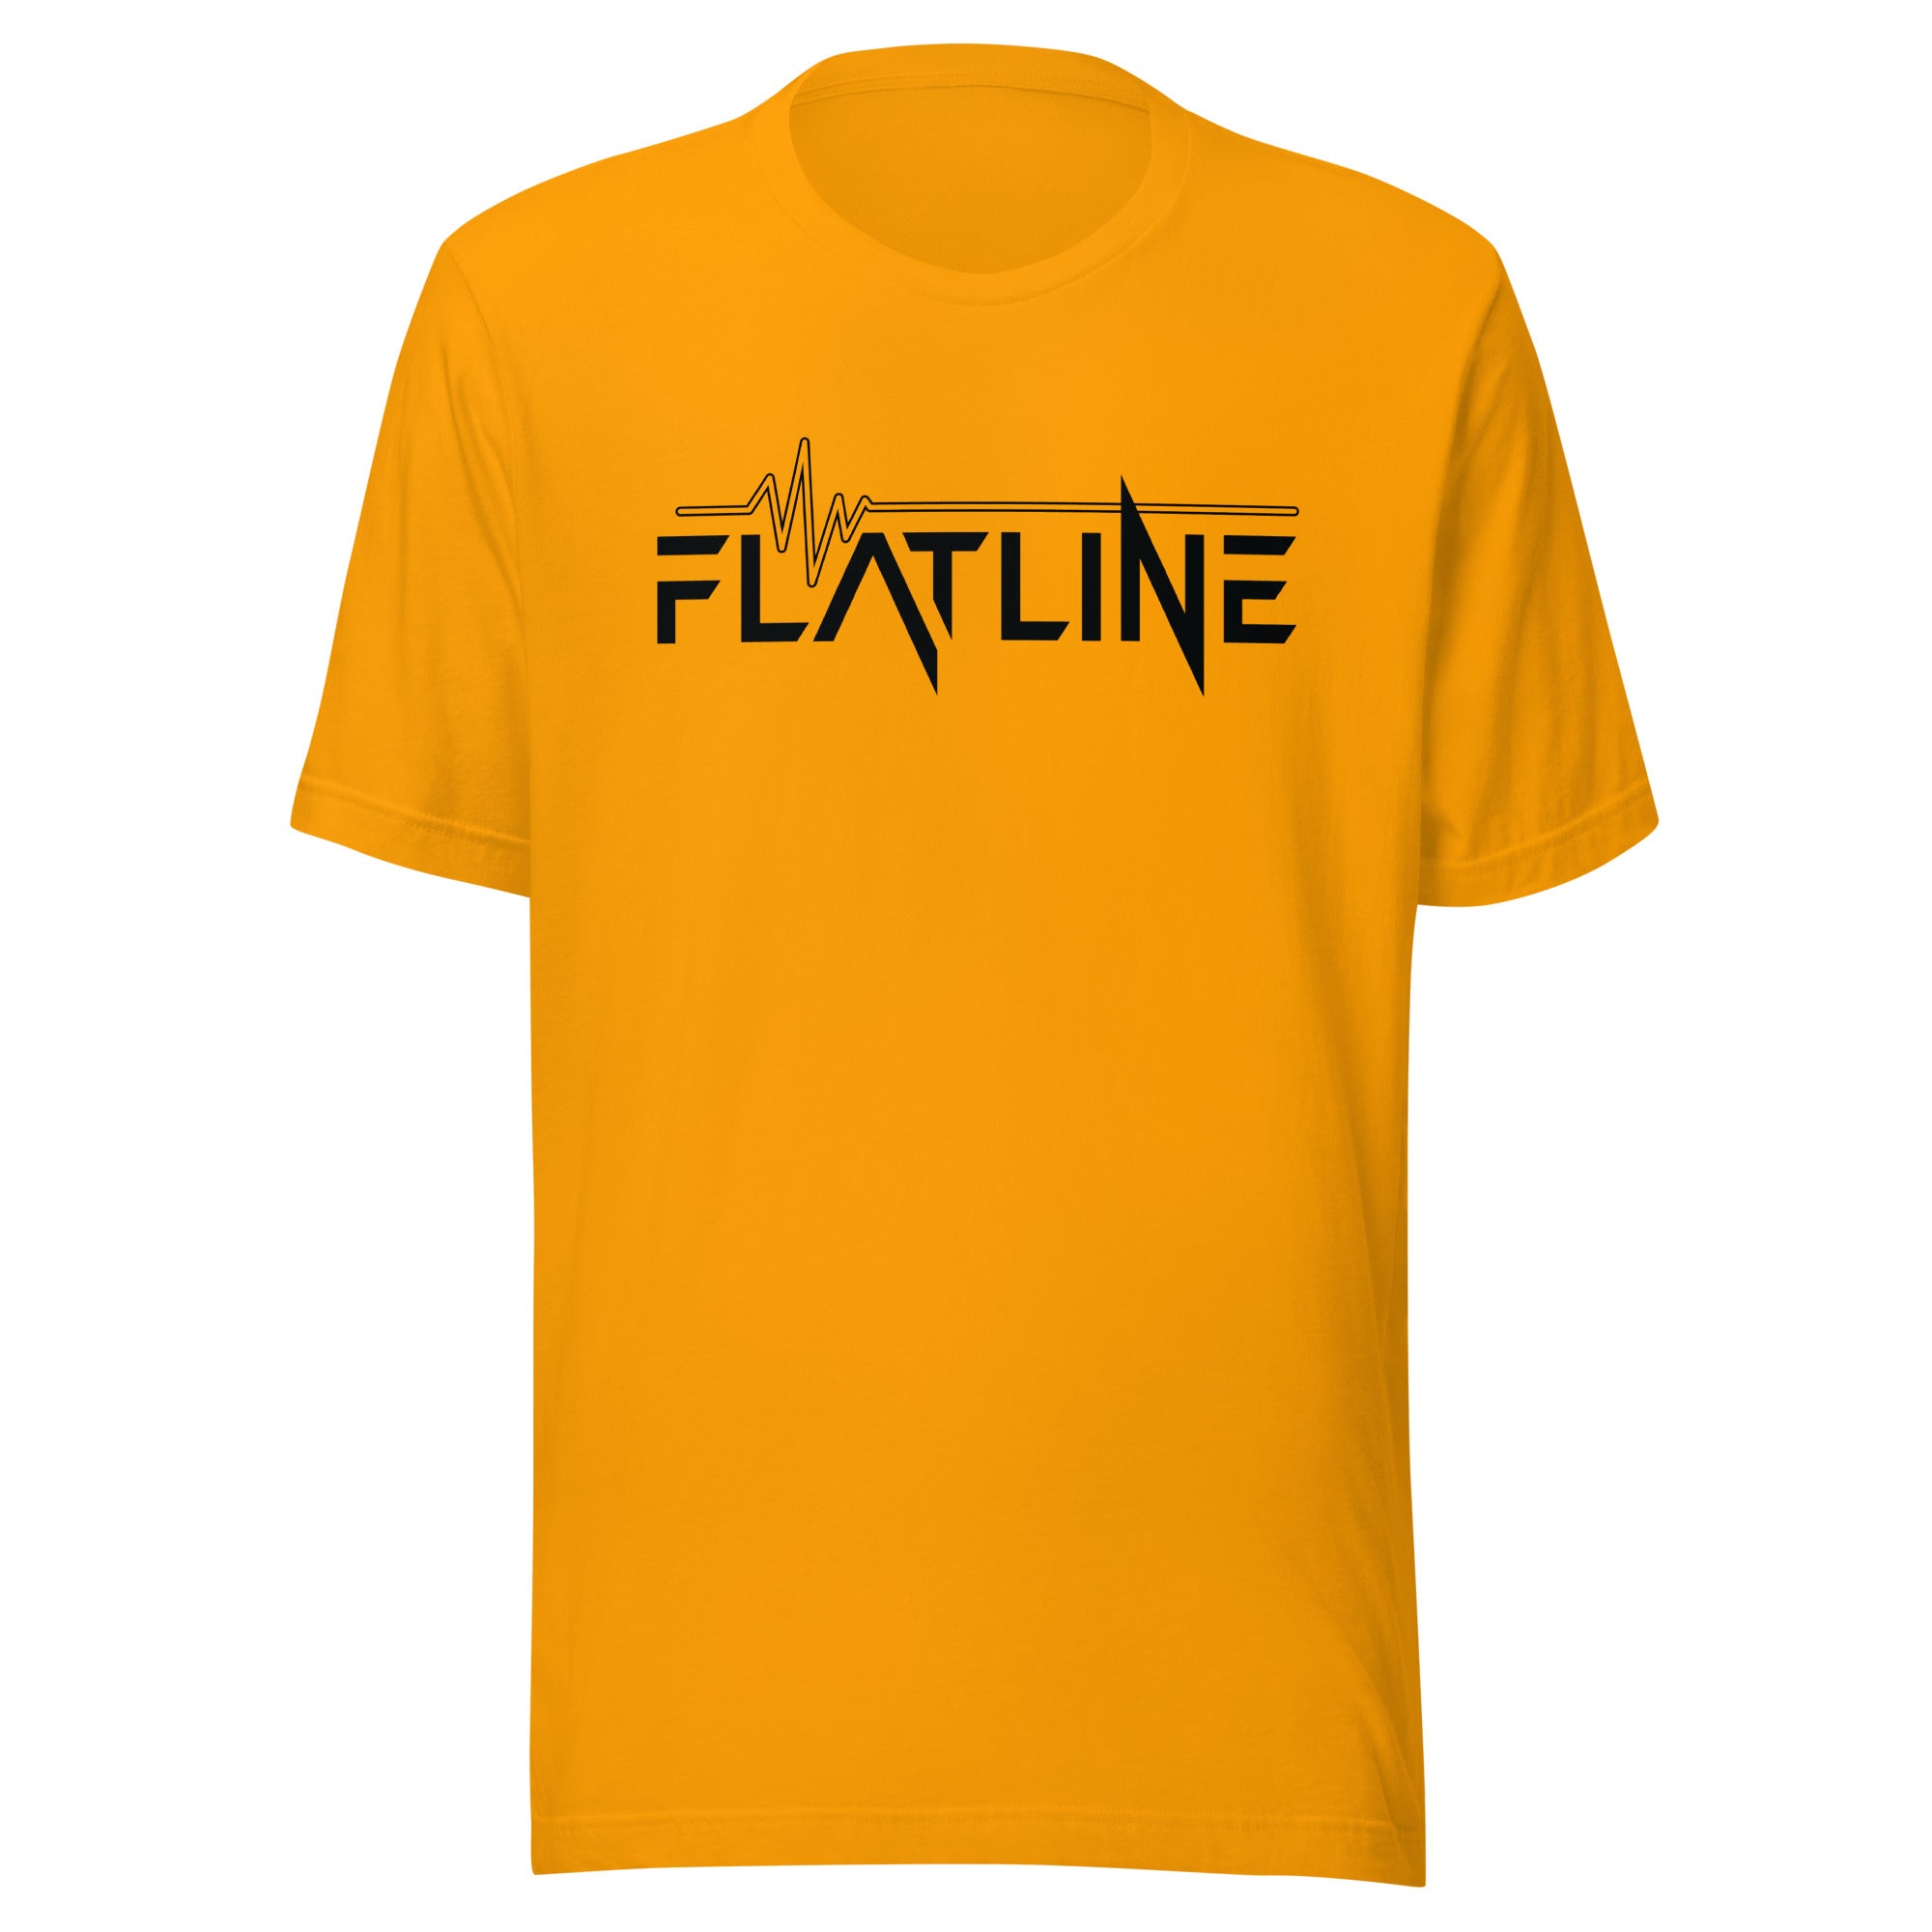 Kris Bourne - Flatline - Unisex t-shirt